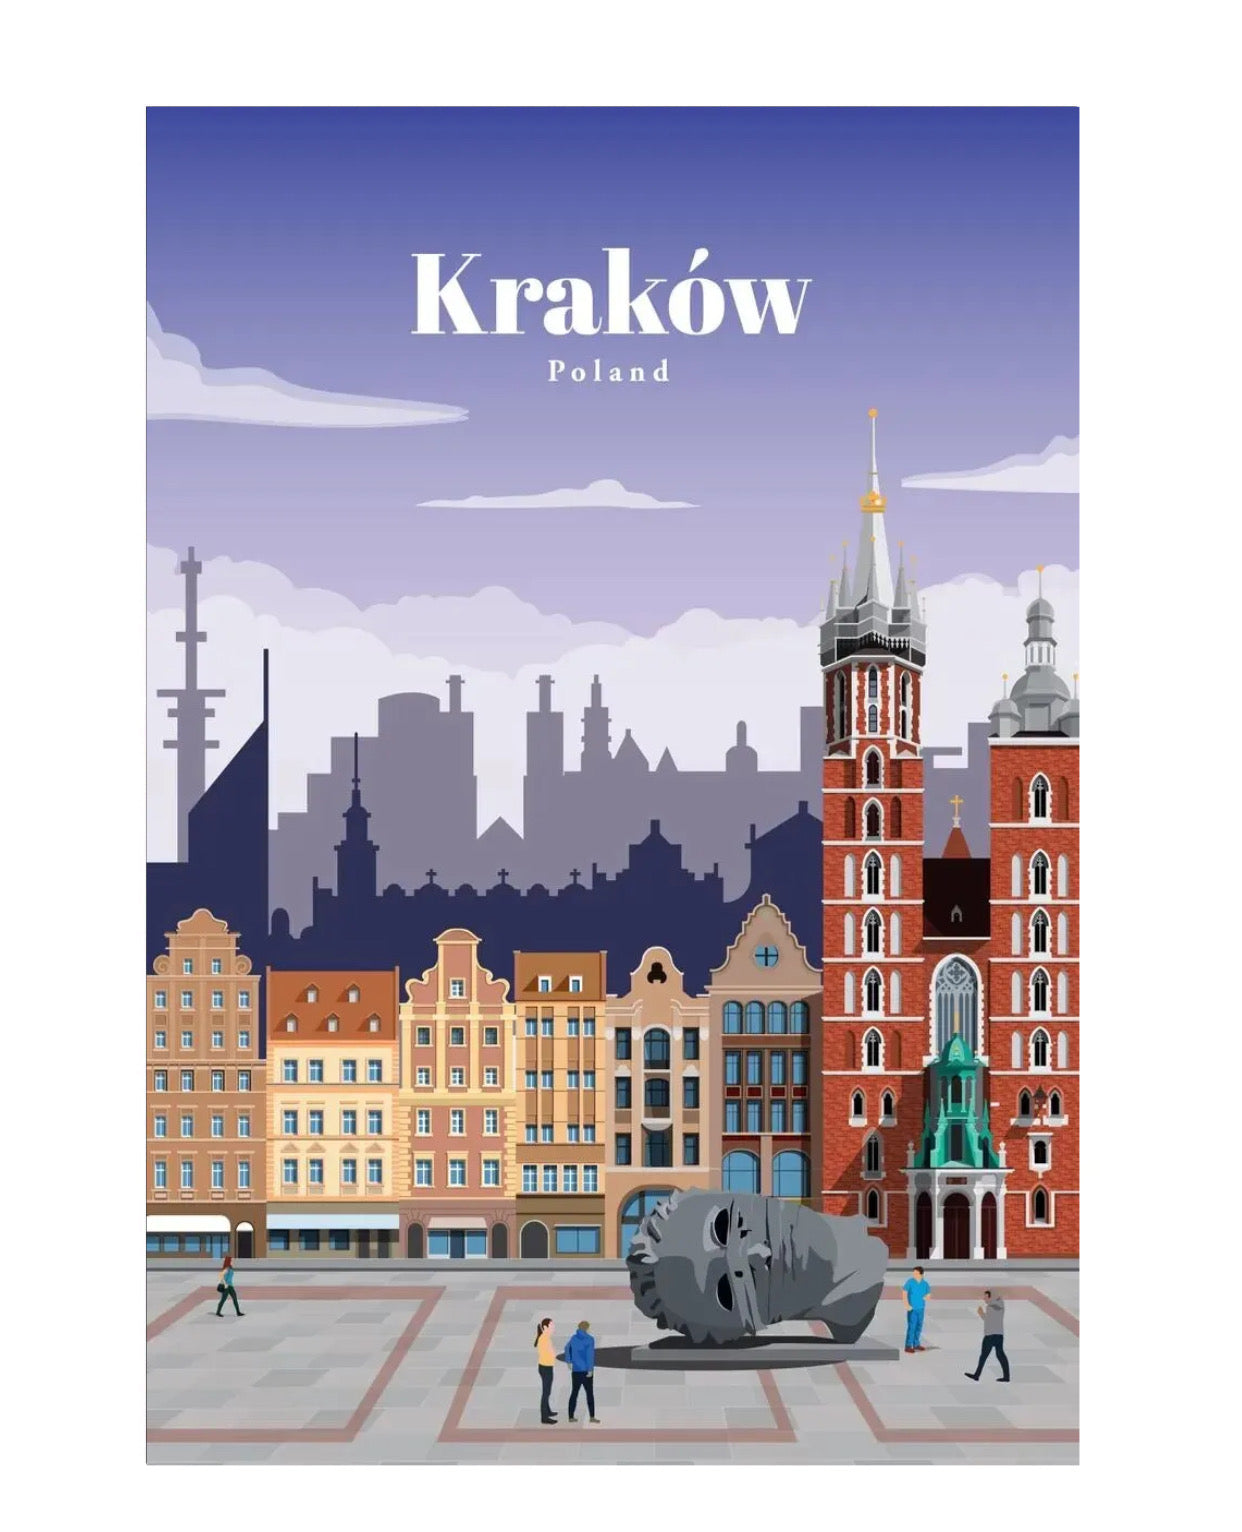 krakòw poster